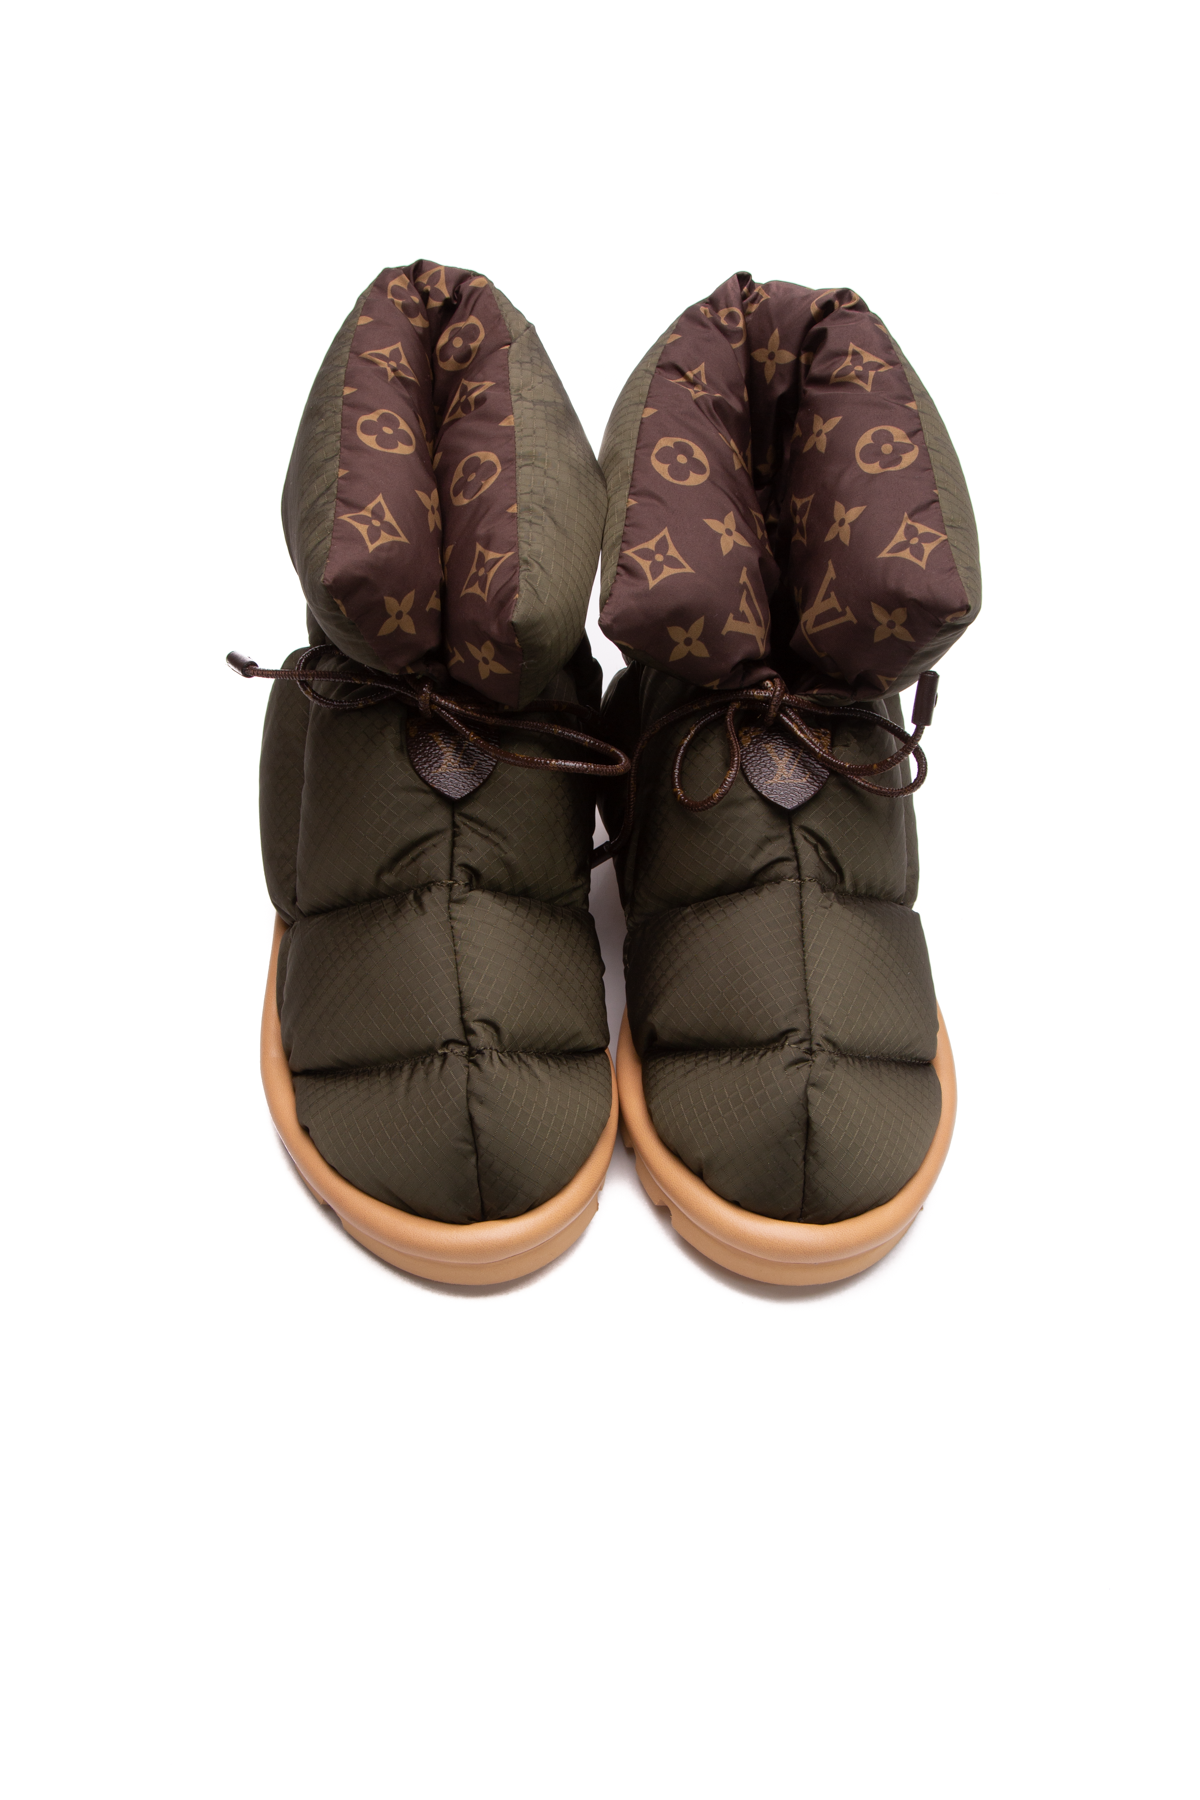 Louis Vuitton Monogram Pillow Comfort Ankle Boot